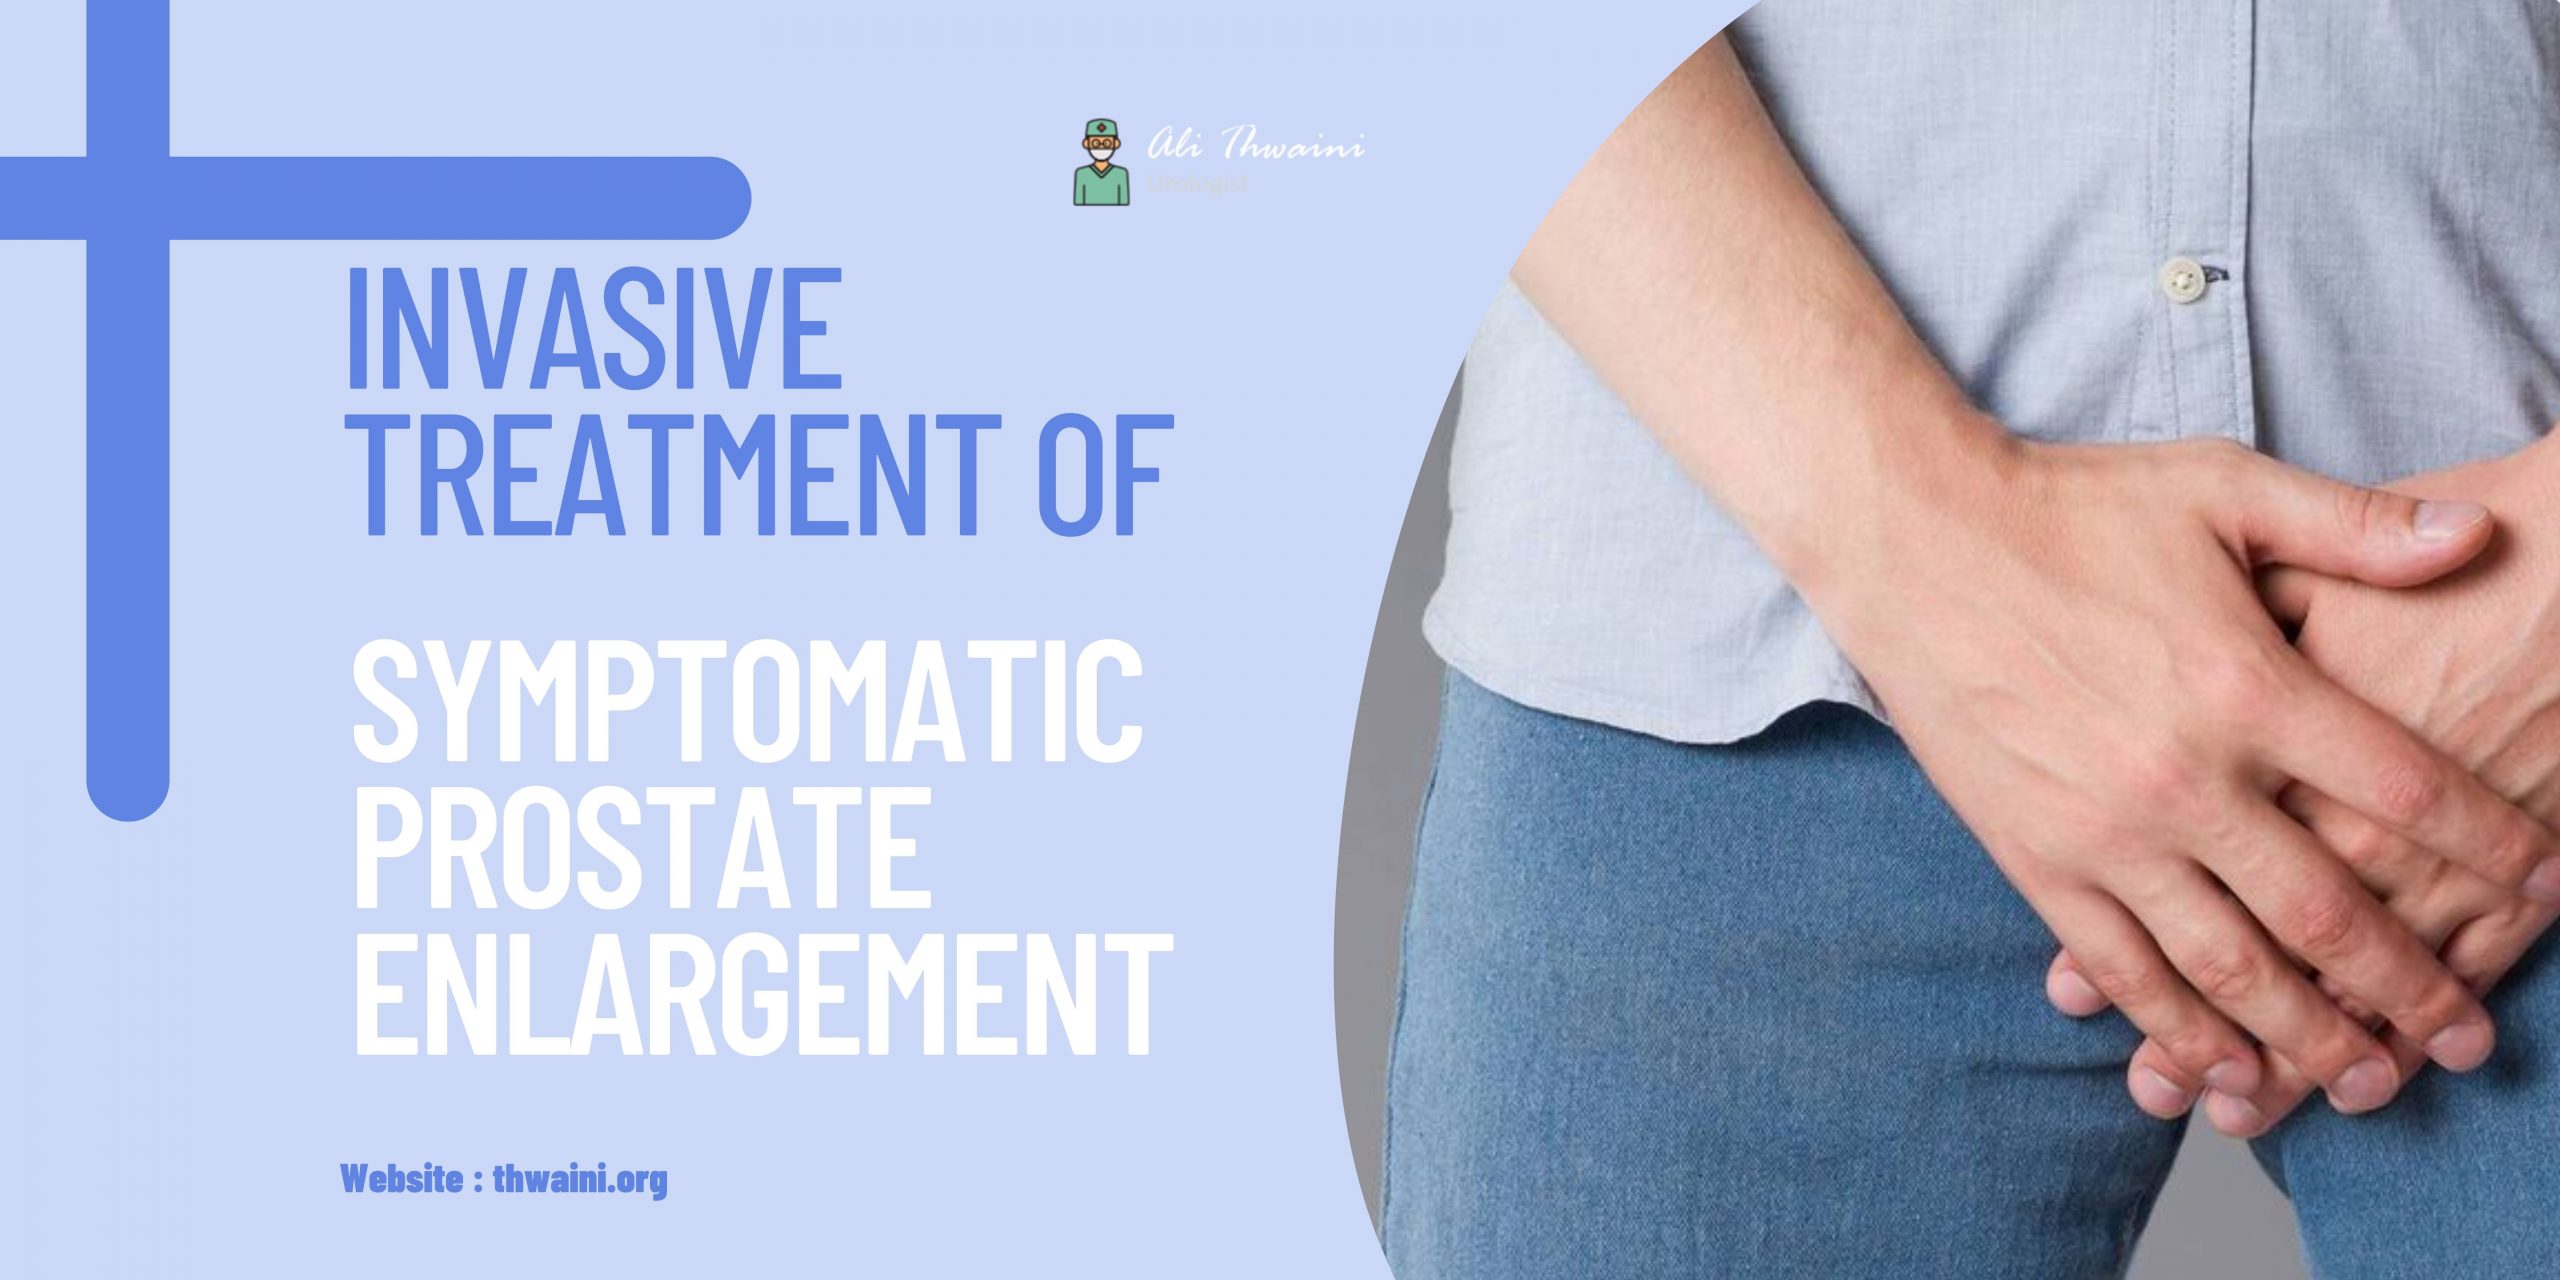 Invasive treatment of symptomatic prostatic enlargement. Many ways to skin a cat